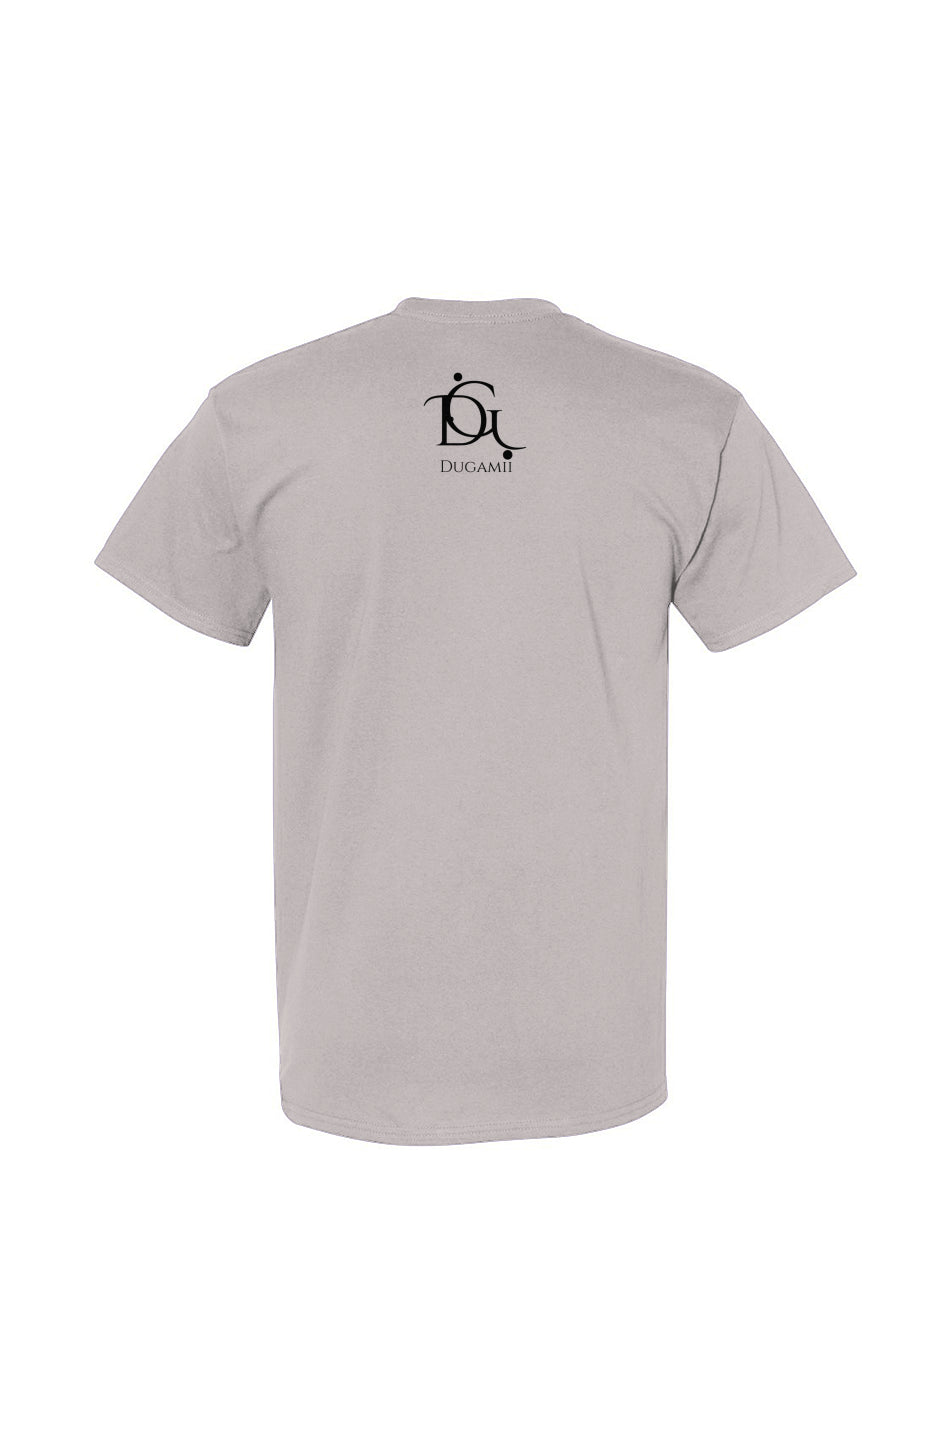 DuGamii "Distorted American Flag" Ice Grey T-Shirt